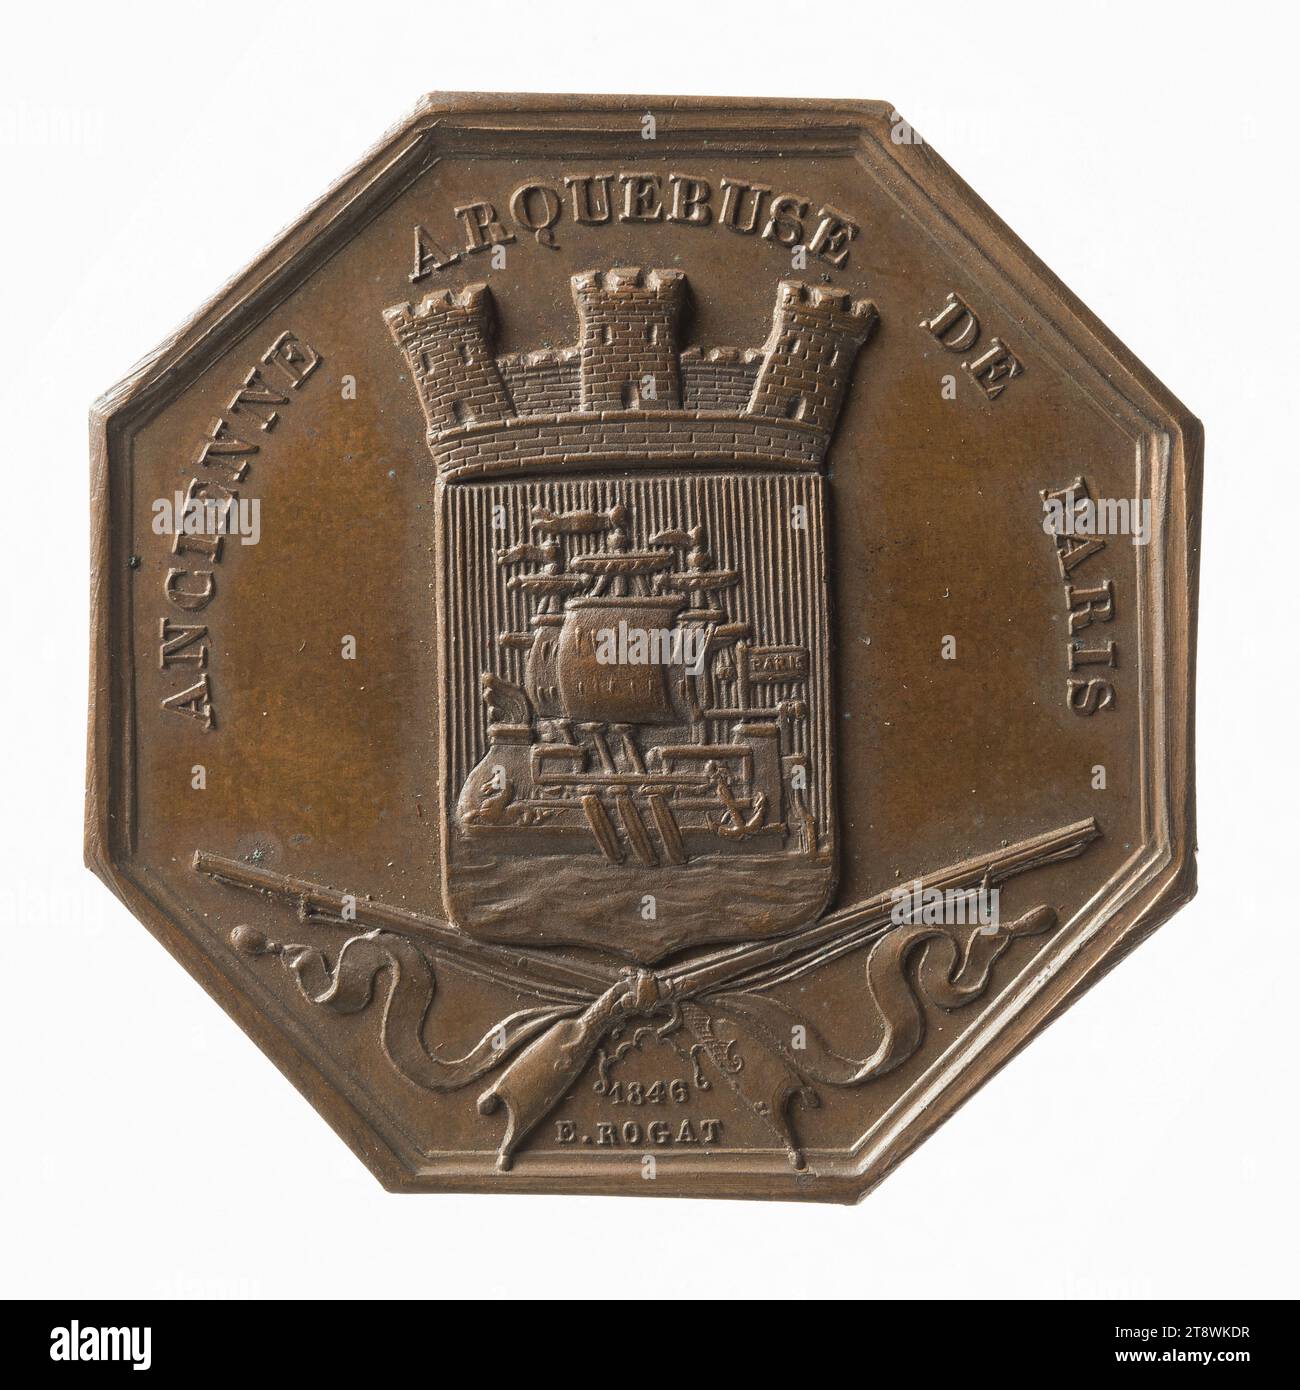 Cercle des carabiniers, old arquebuse of Paris, 1846, Rogat, Emile, In 1846, Numismatic, Token (numismatic), Bronze, Diameter: 3.5 cm, Weight (type dimension): 19.21 g Stock Photo